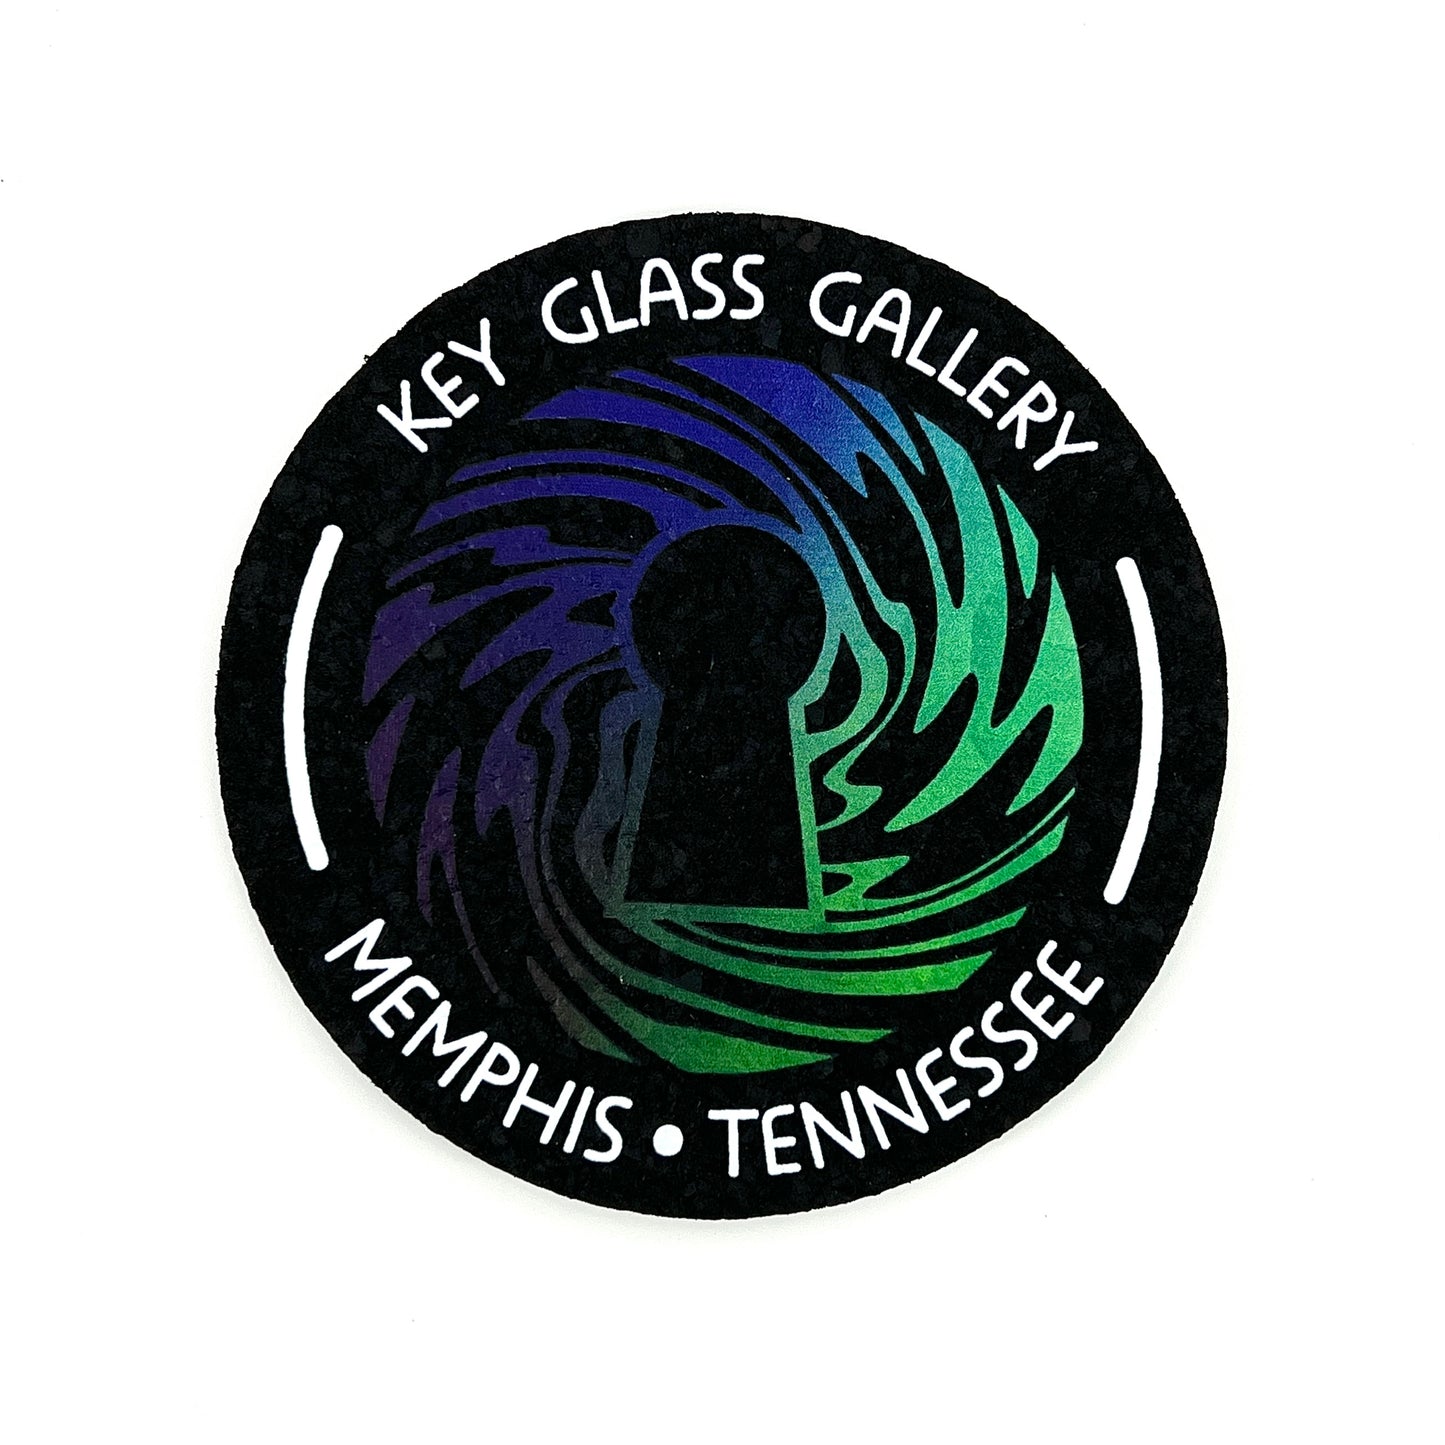 LE:100 Key Glass Gallery 5” round Moodmat